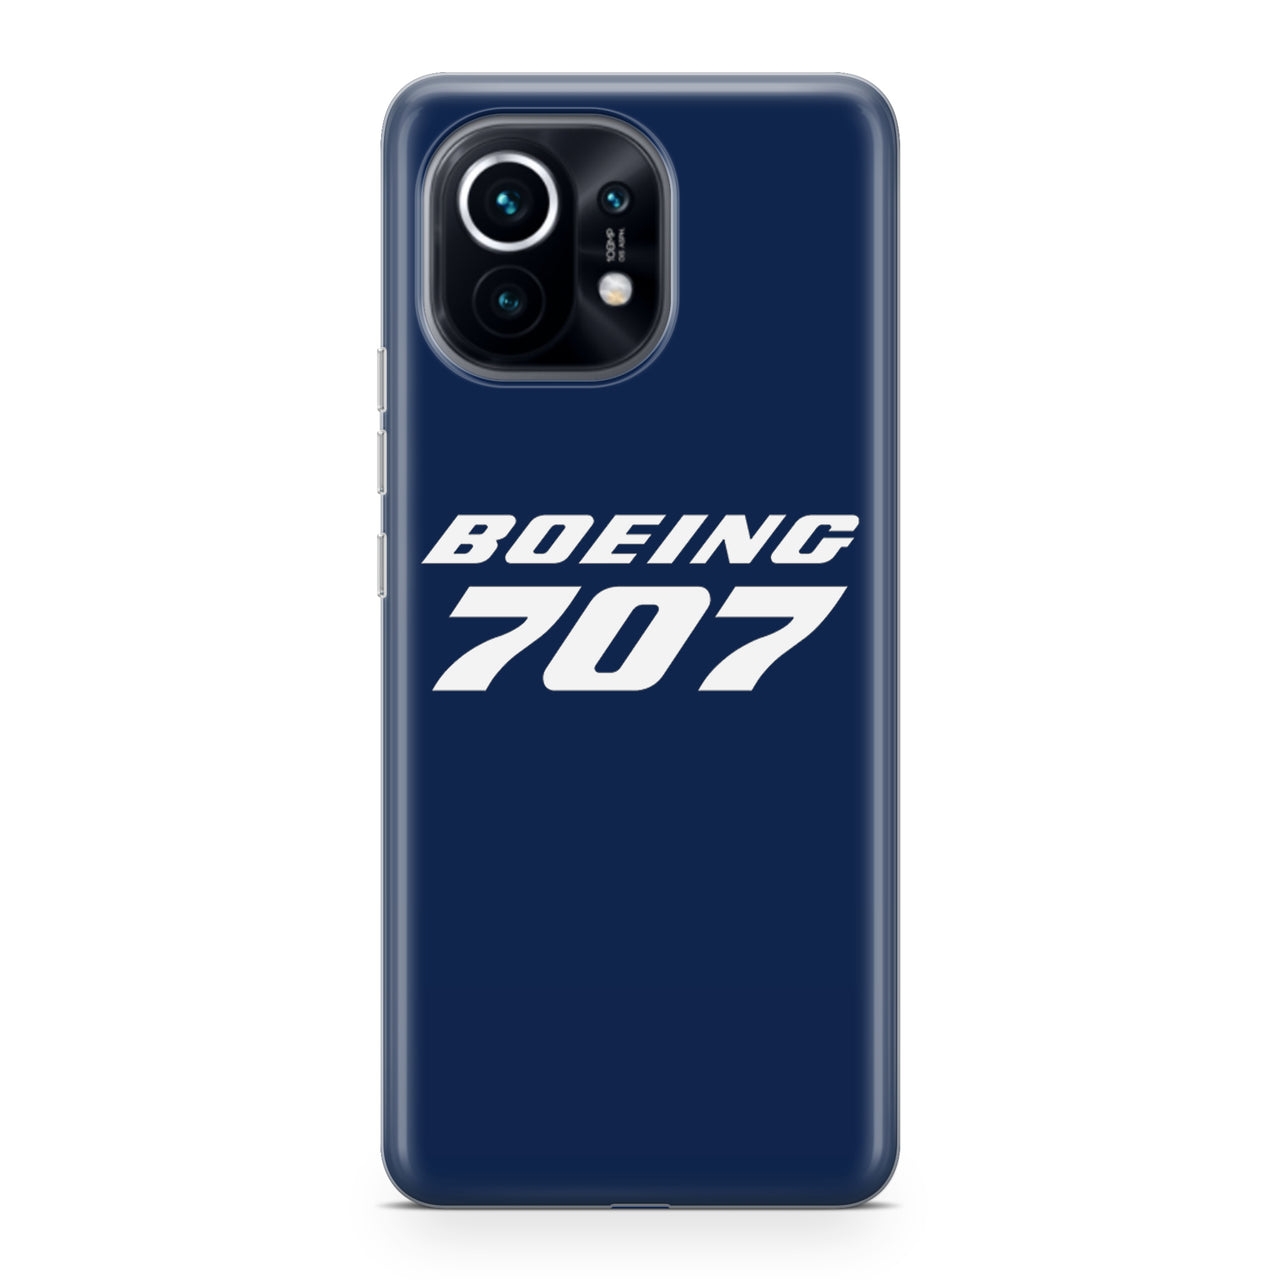 Boeing 707 & Text Designed Xiaomi Cases